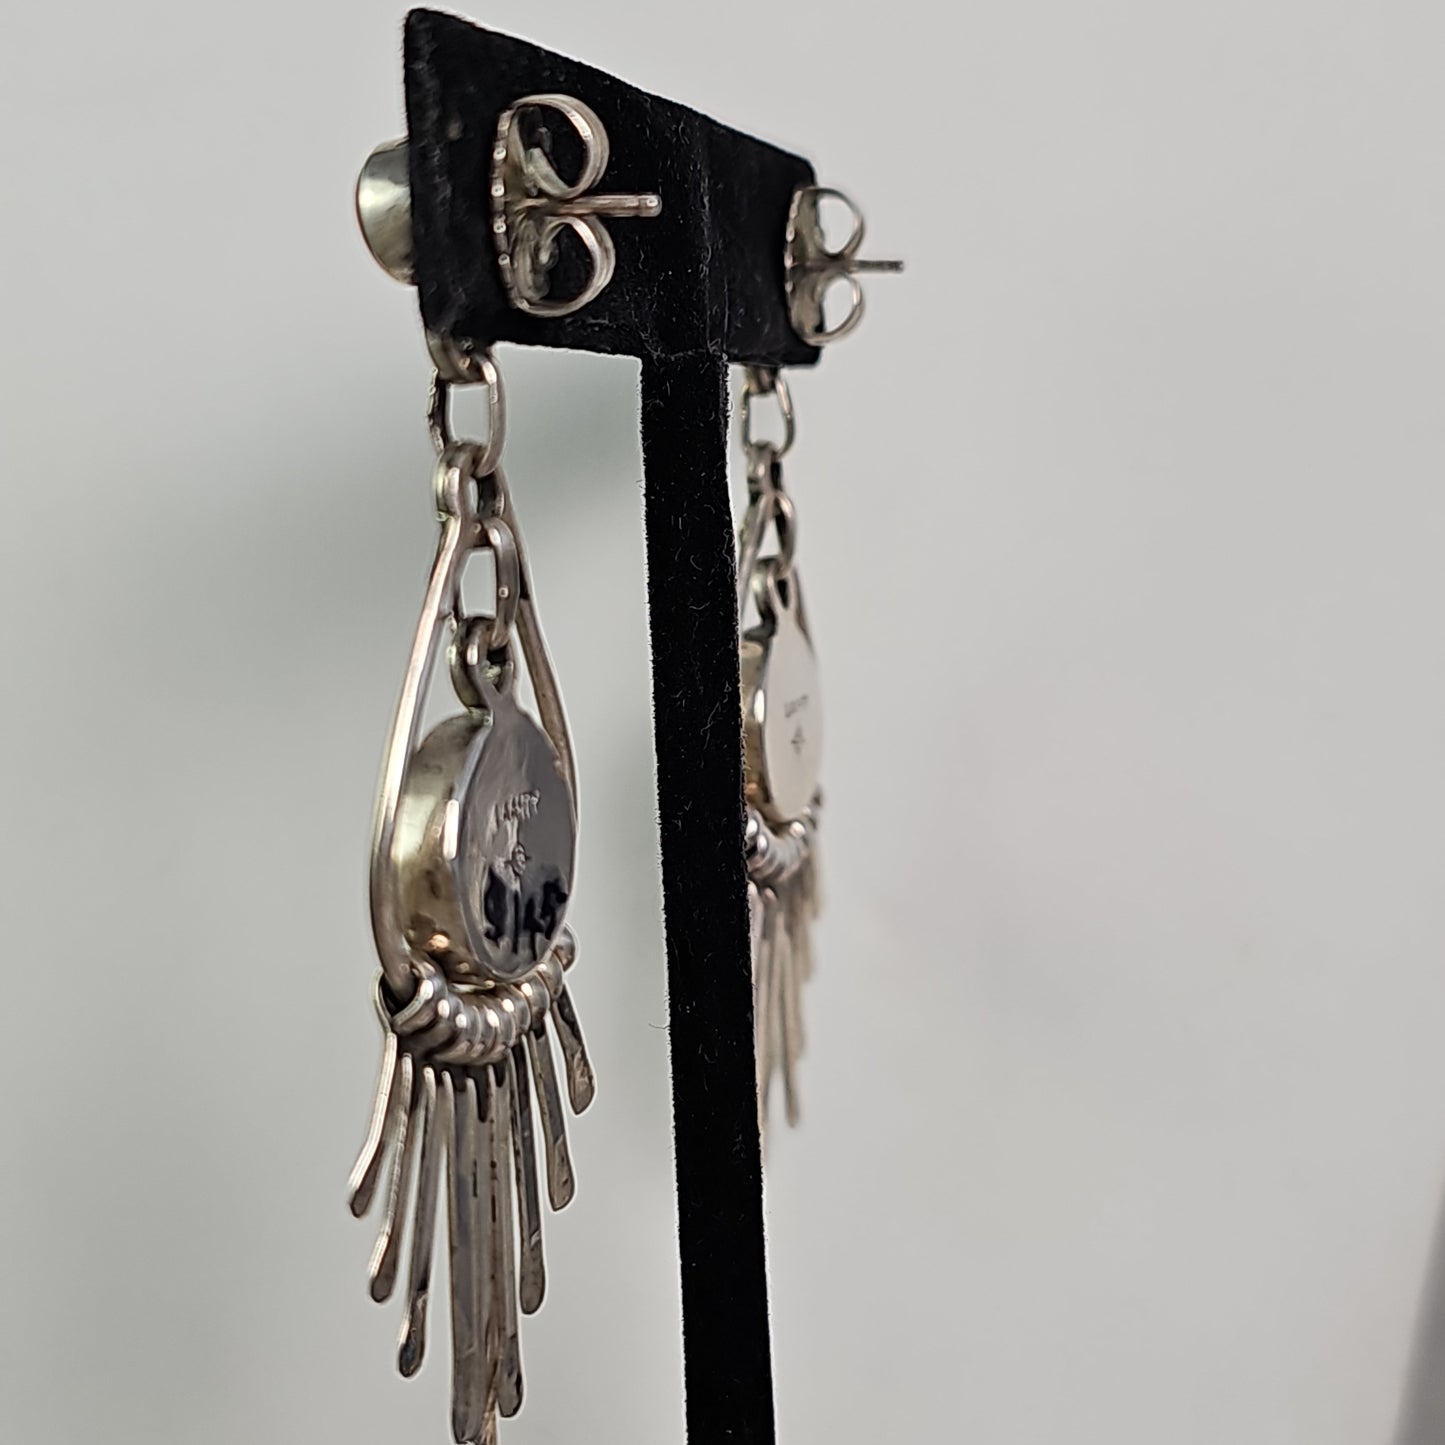 Zuni inlay earrings